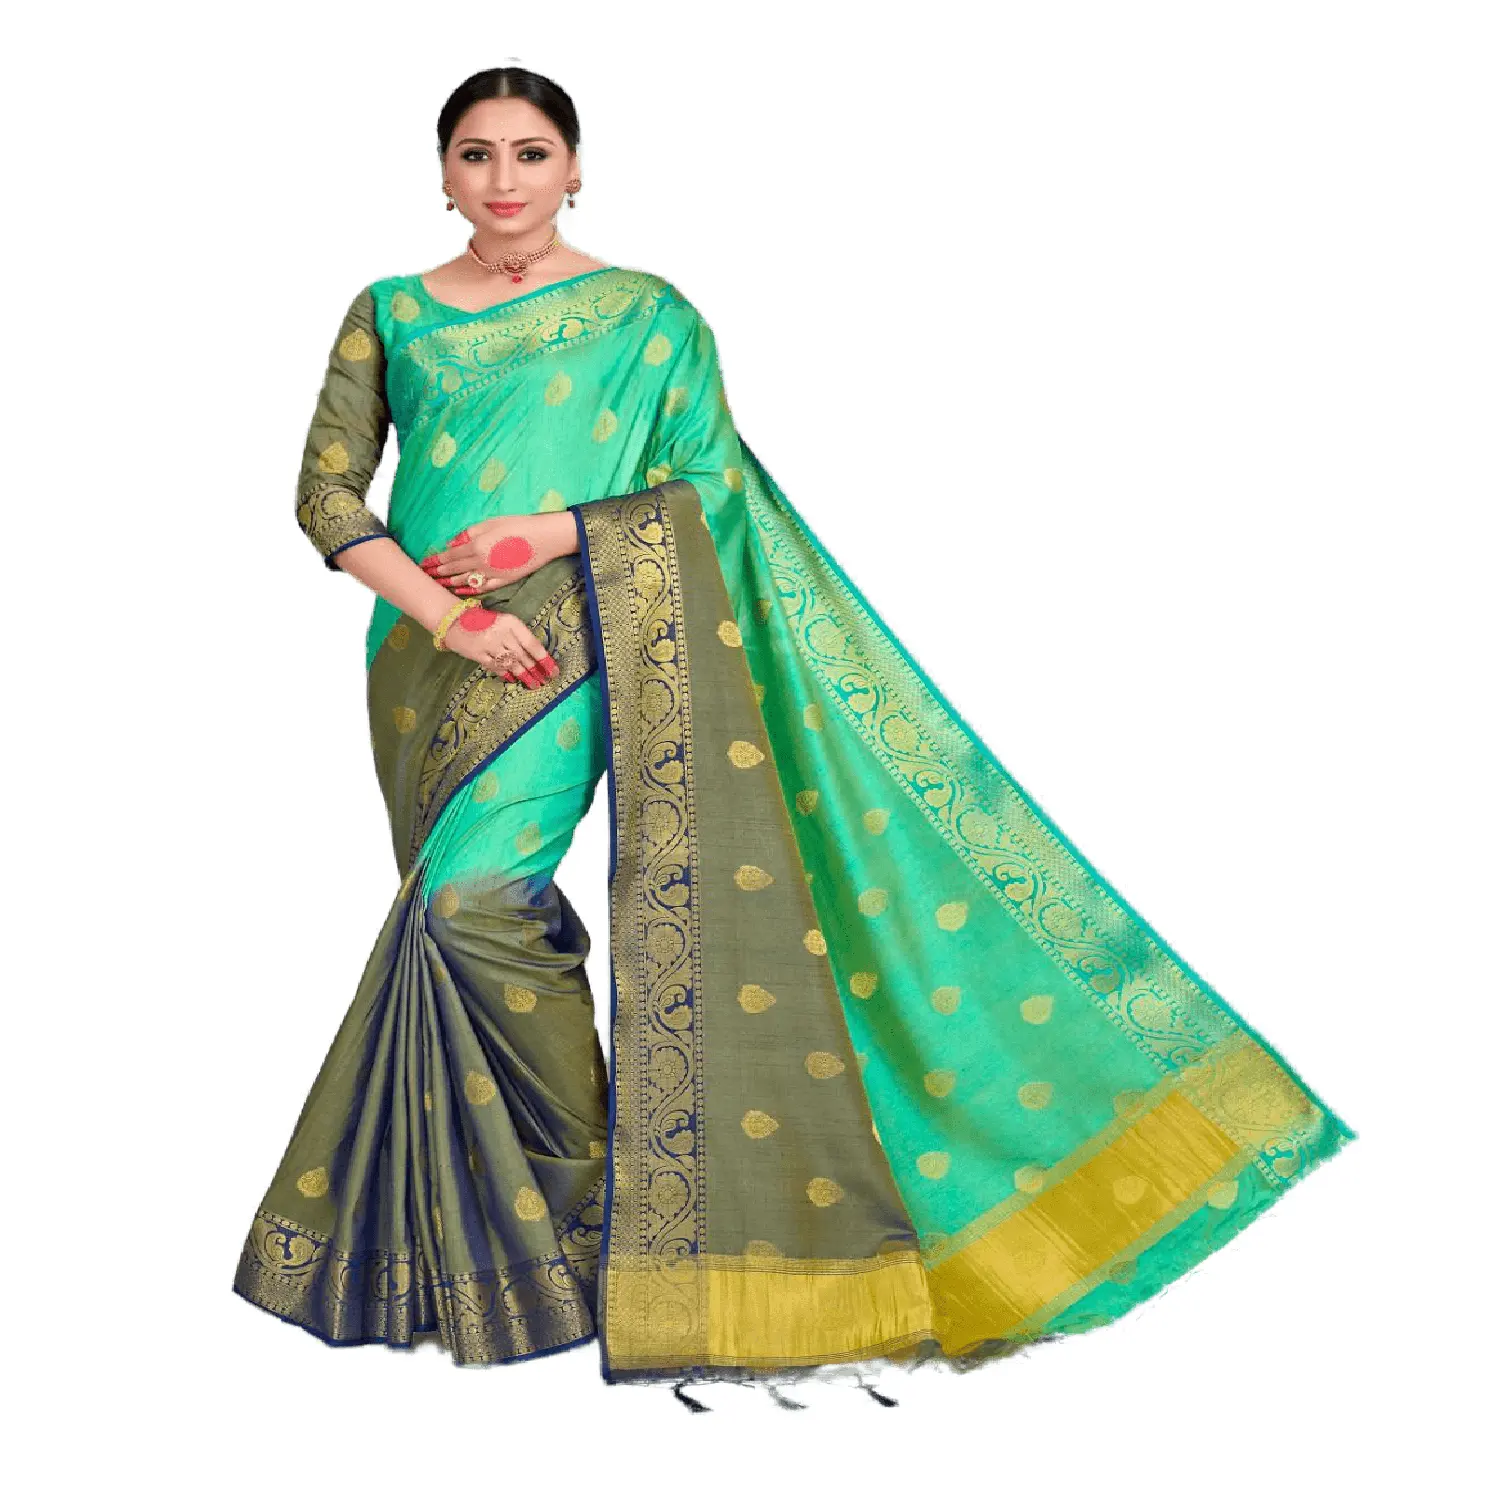 R & D Exports New Design Pakistani Silk Saree Best Ever Wedding Collection Saree With Blouse